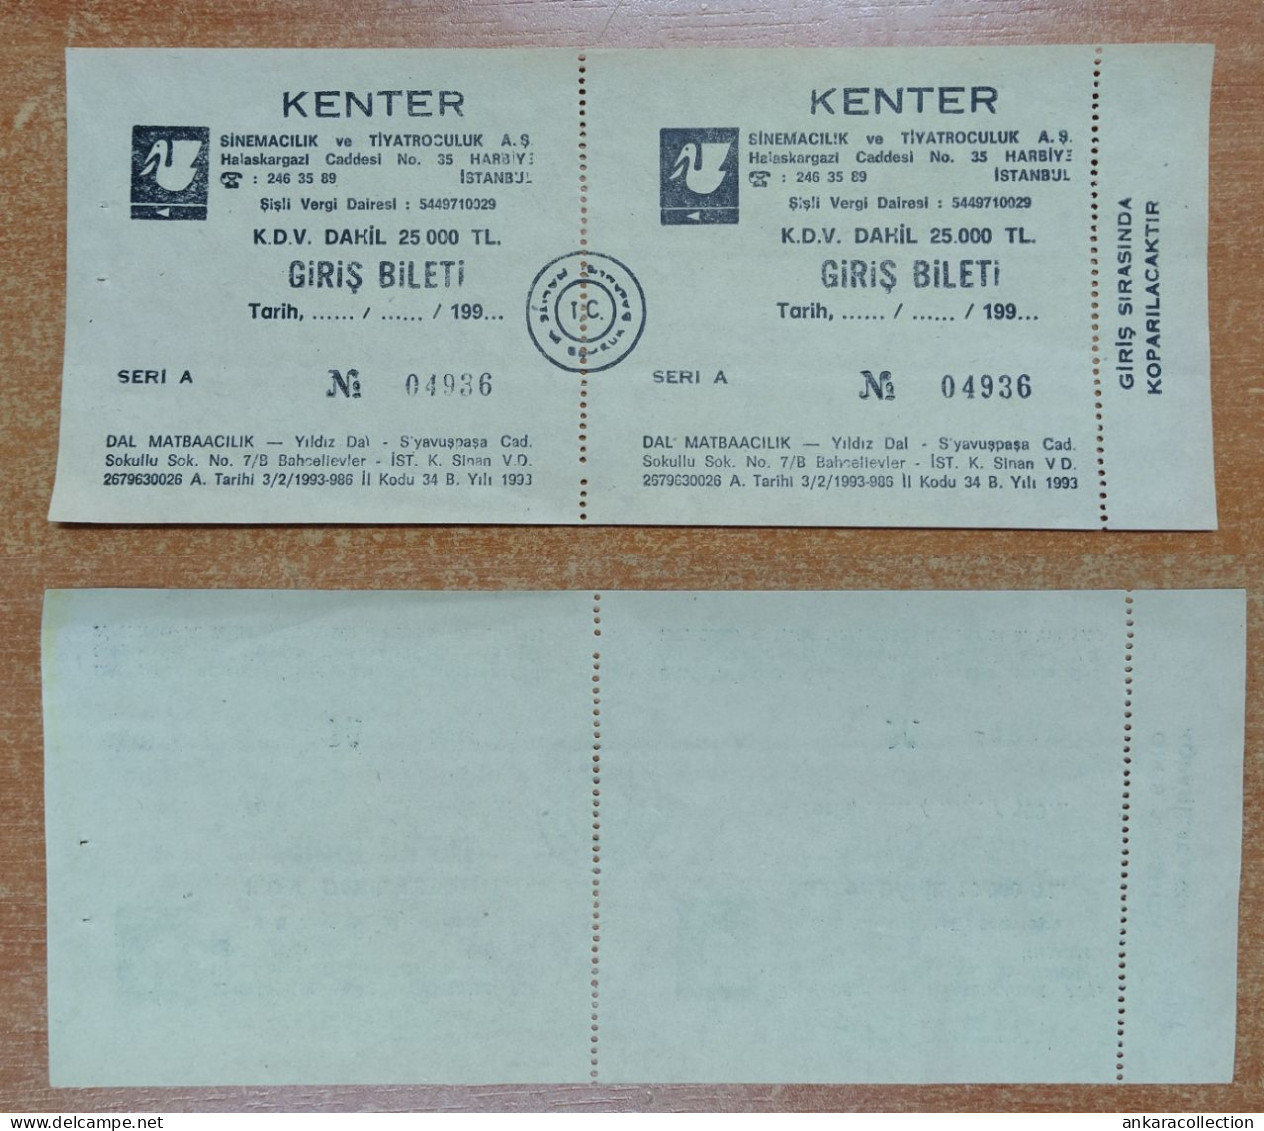 AC - KENTER  CINEMA & THEATER TICKET  1993  ISTANBUL TURKEY CONCERT TICKET WITH COUNTERFOIL - Biglietti Per Concerti